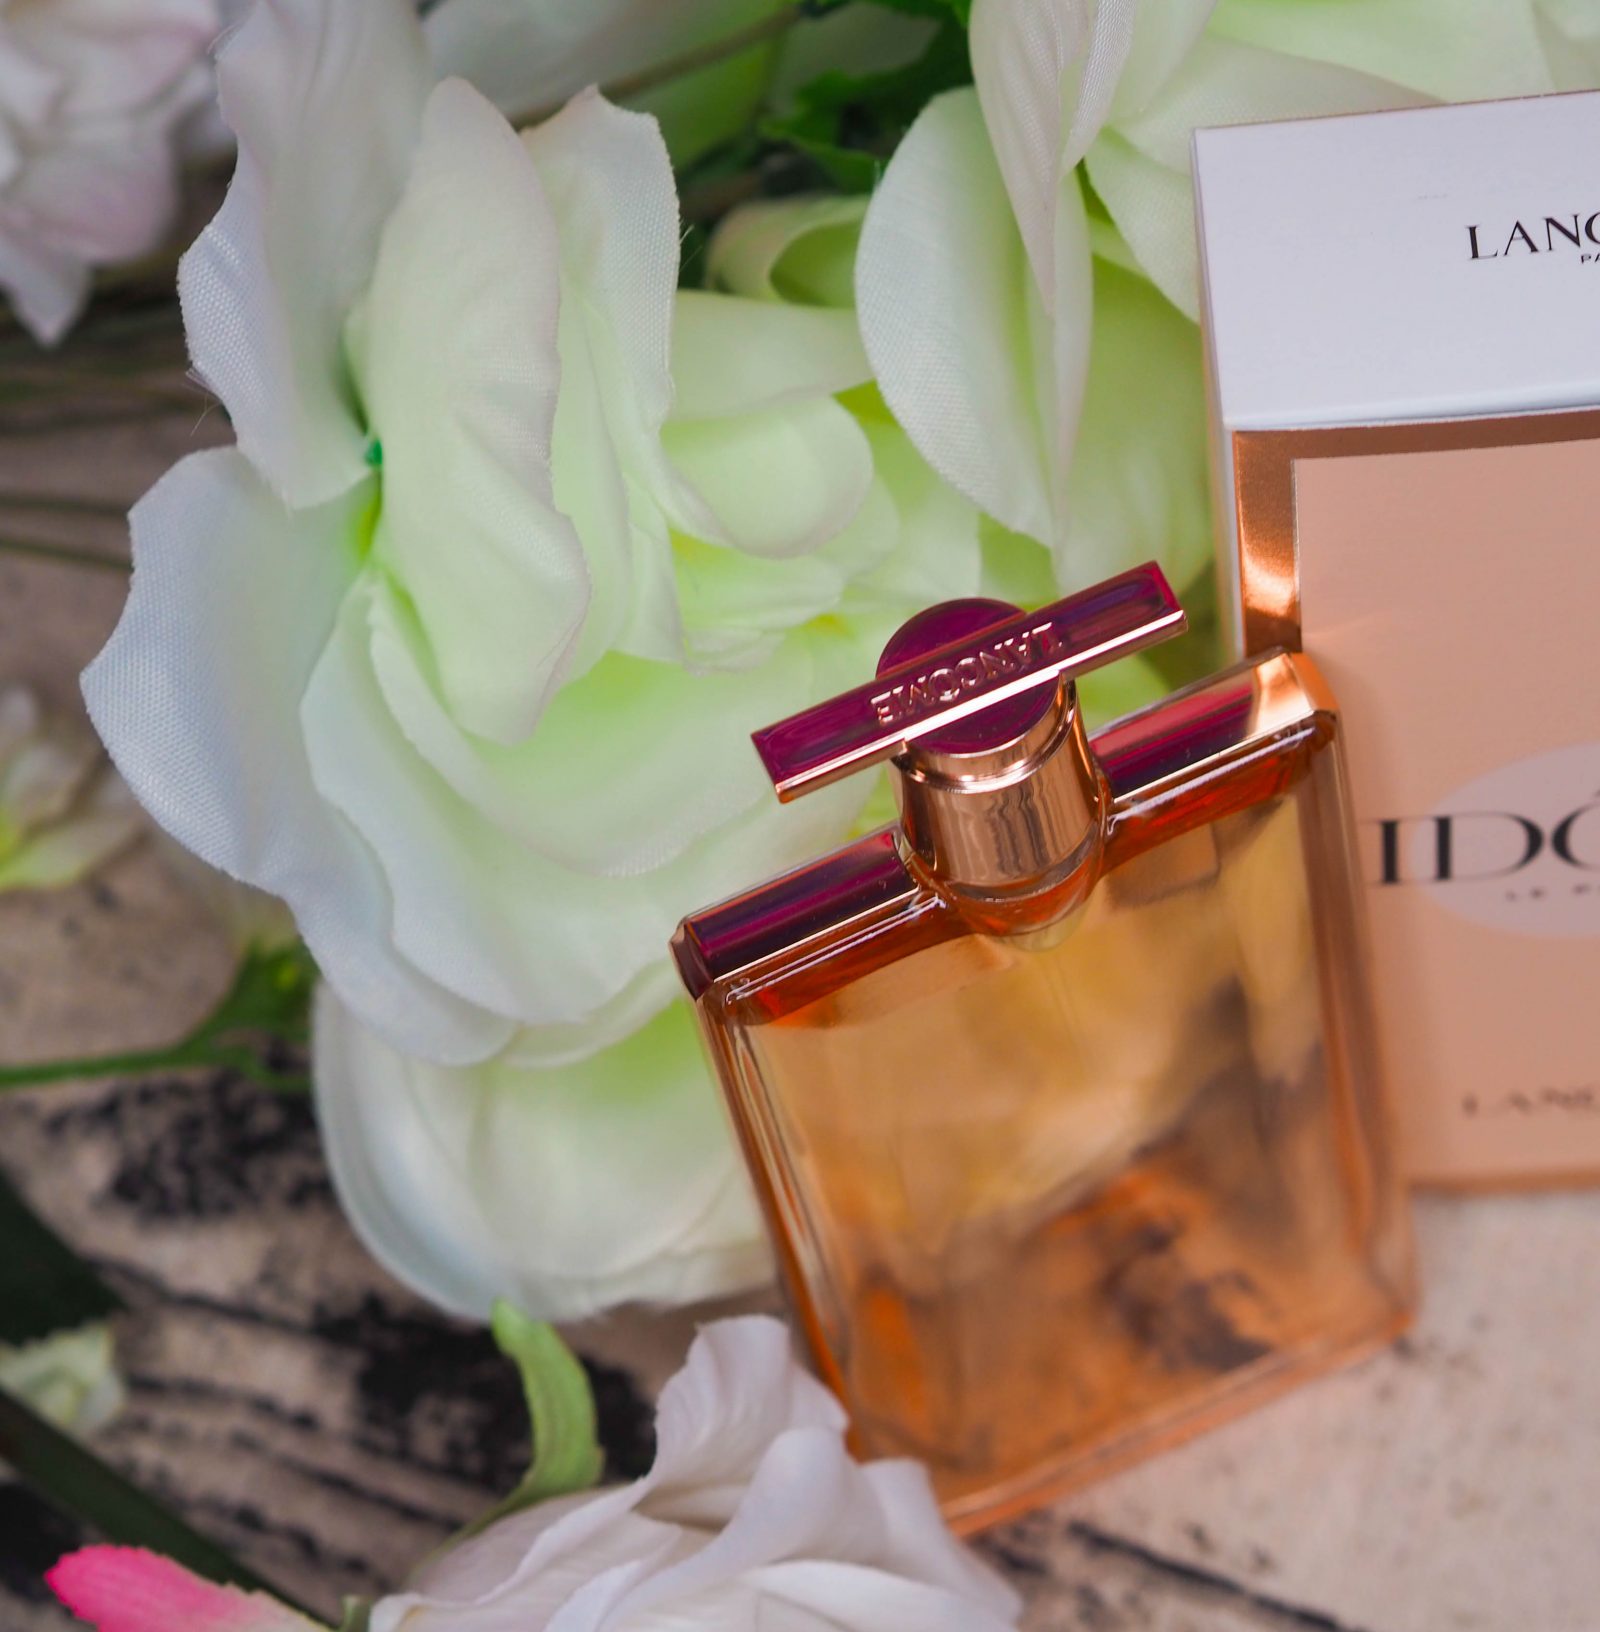 Lancome Idole Fragrance Review - Beauty Geek